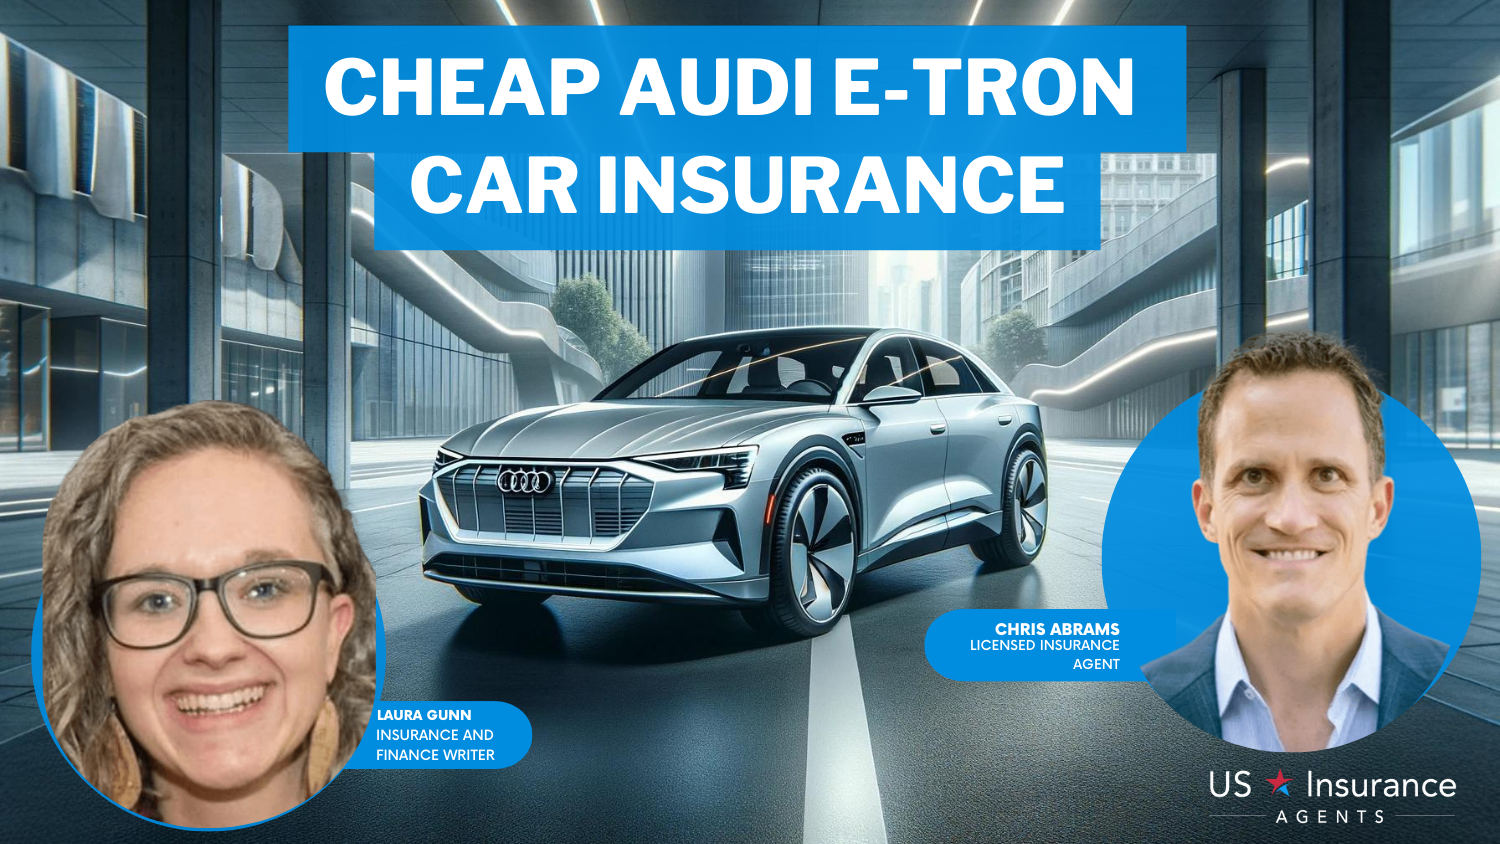 Cheap Audi e-tron Car Insurance: The Hartford, Travelers, The General